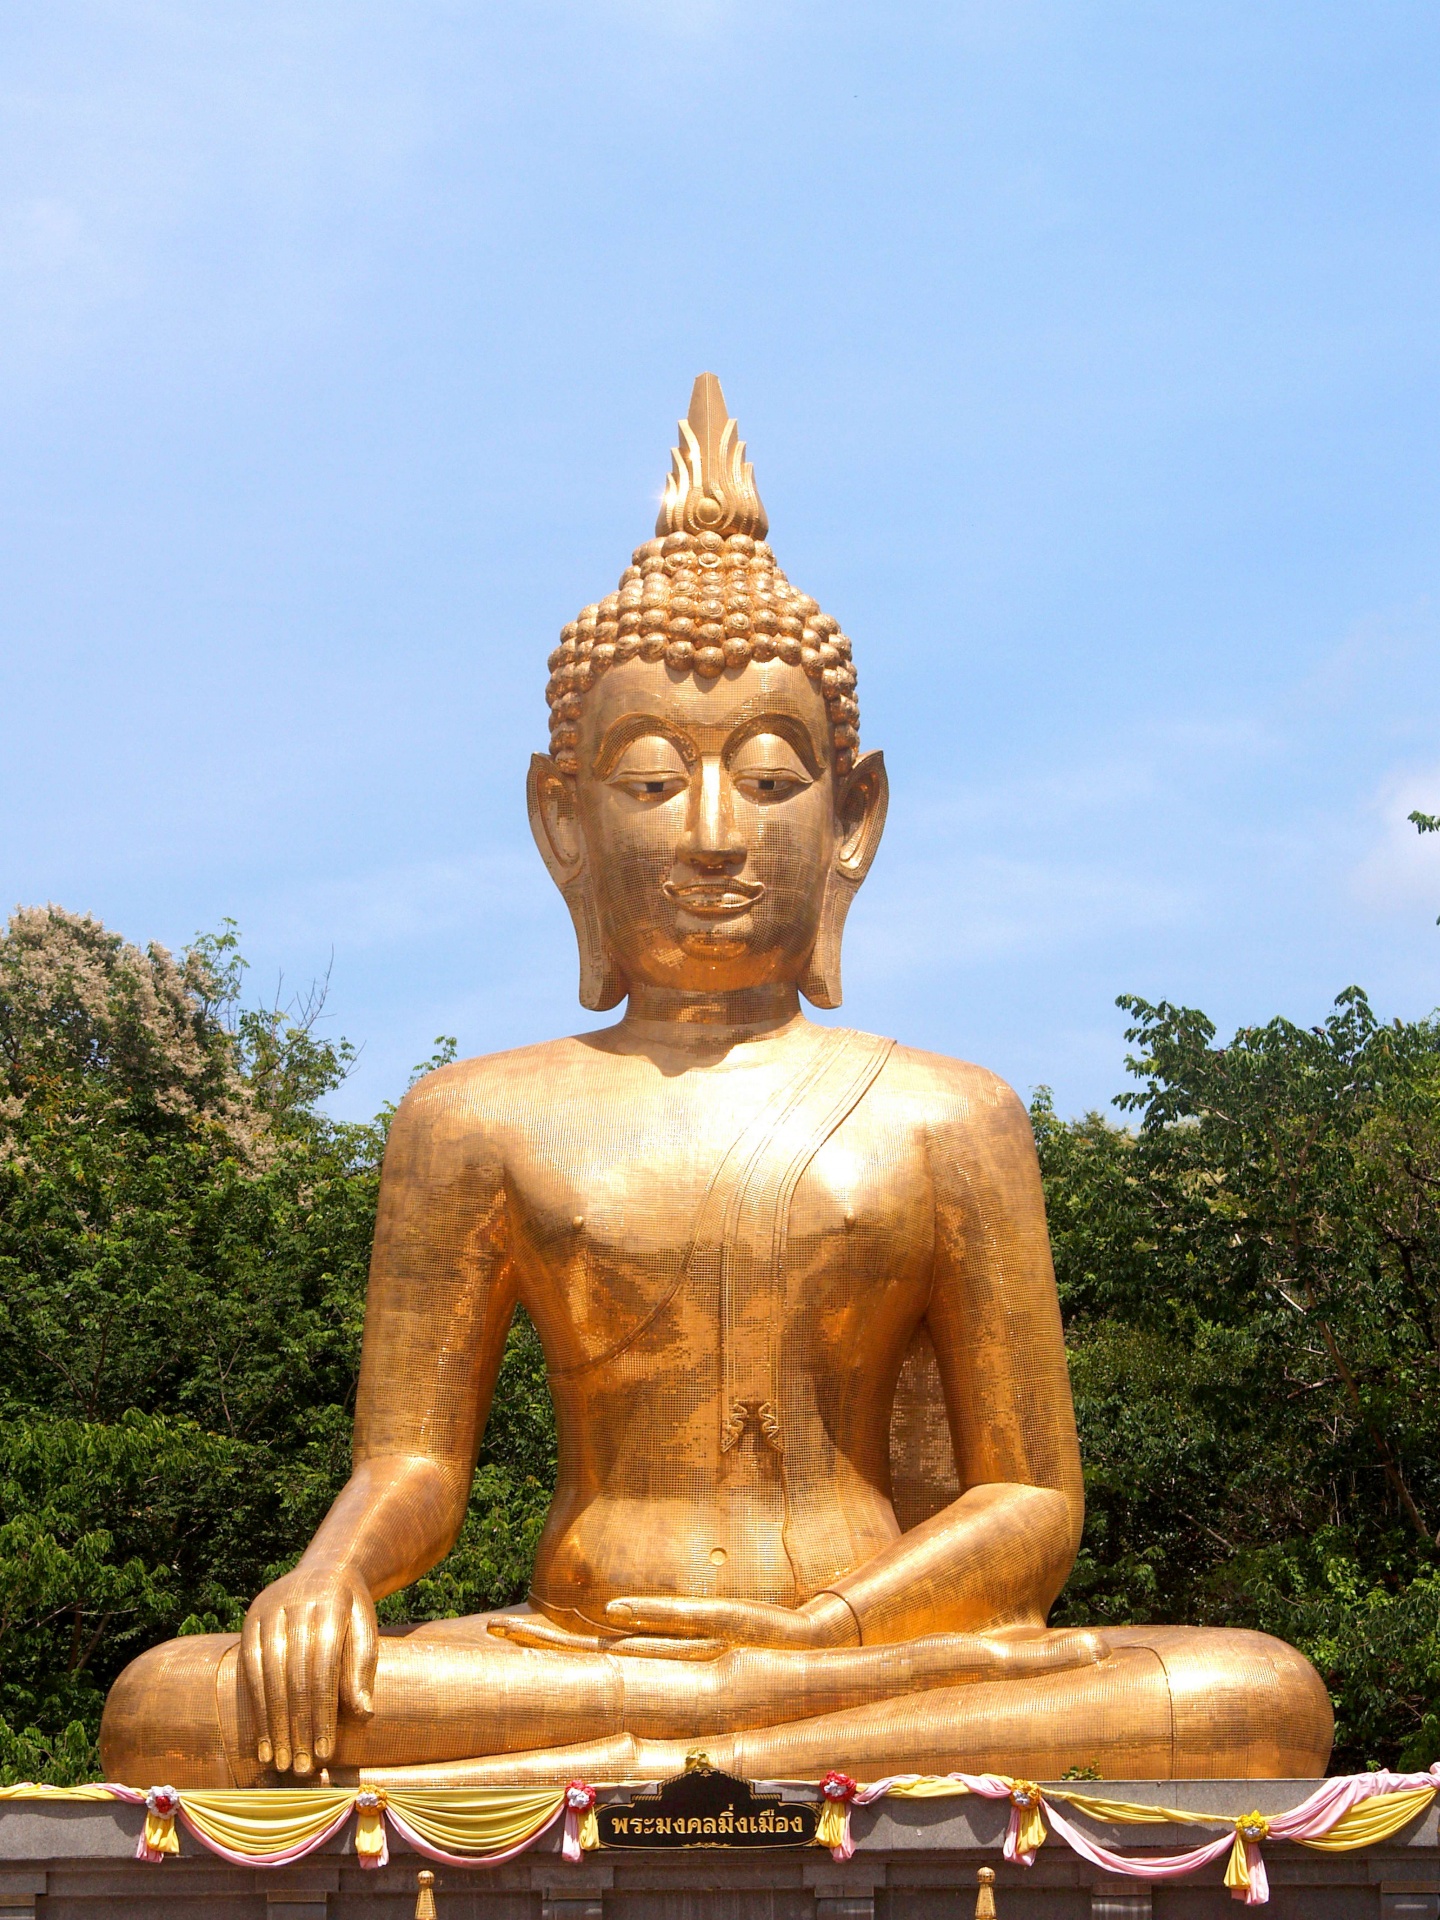 160+ Insightful Buddha Quotes to Inspire Meditation | Thought Catalog